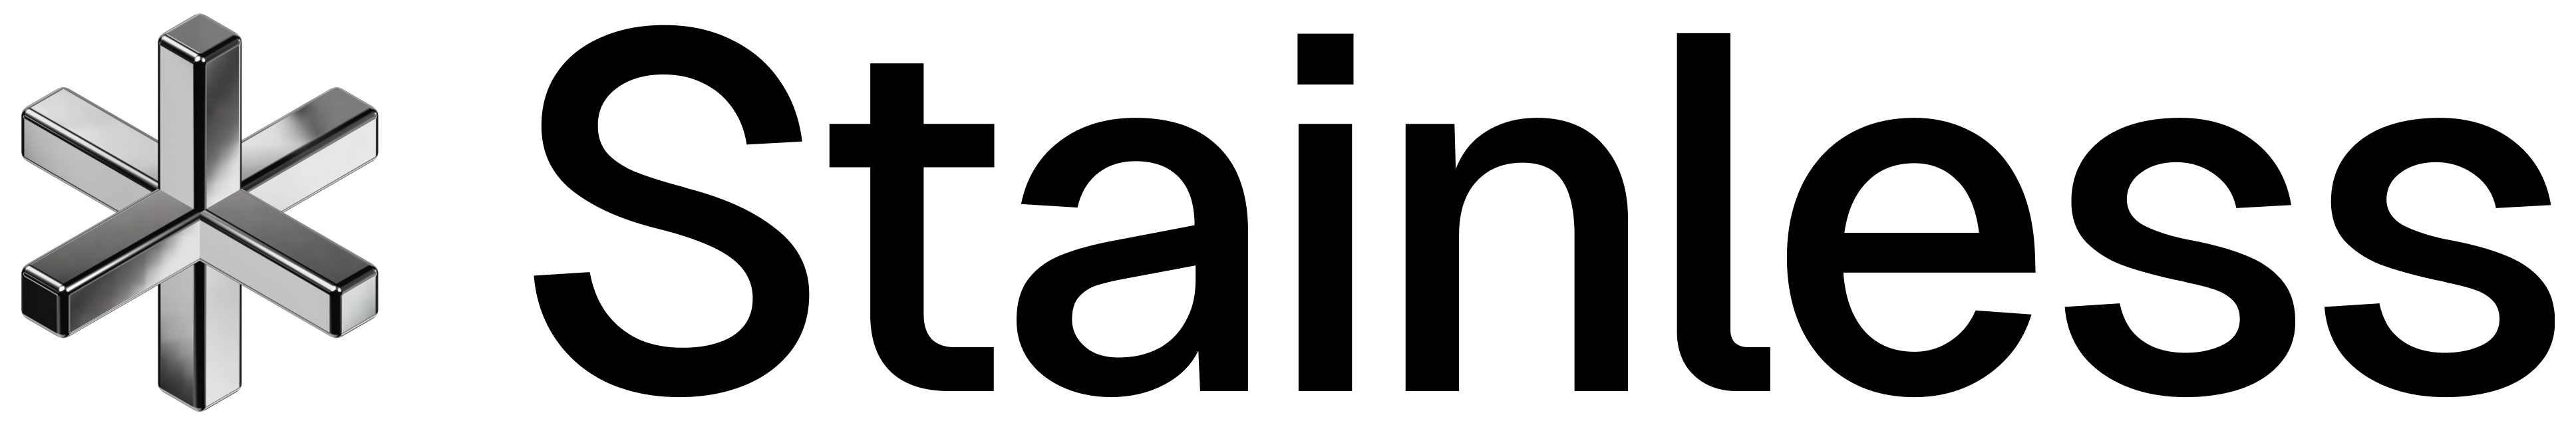 Stainless Logo